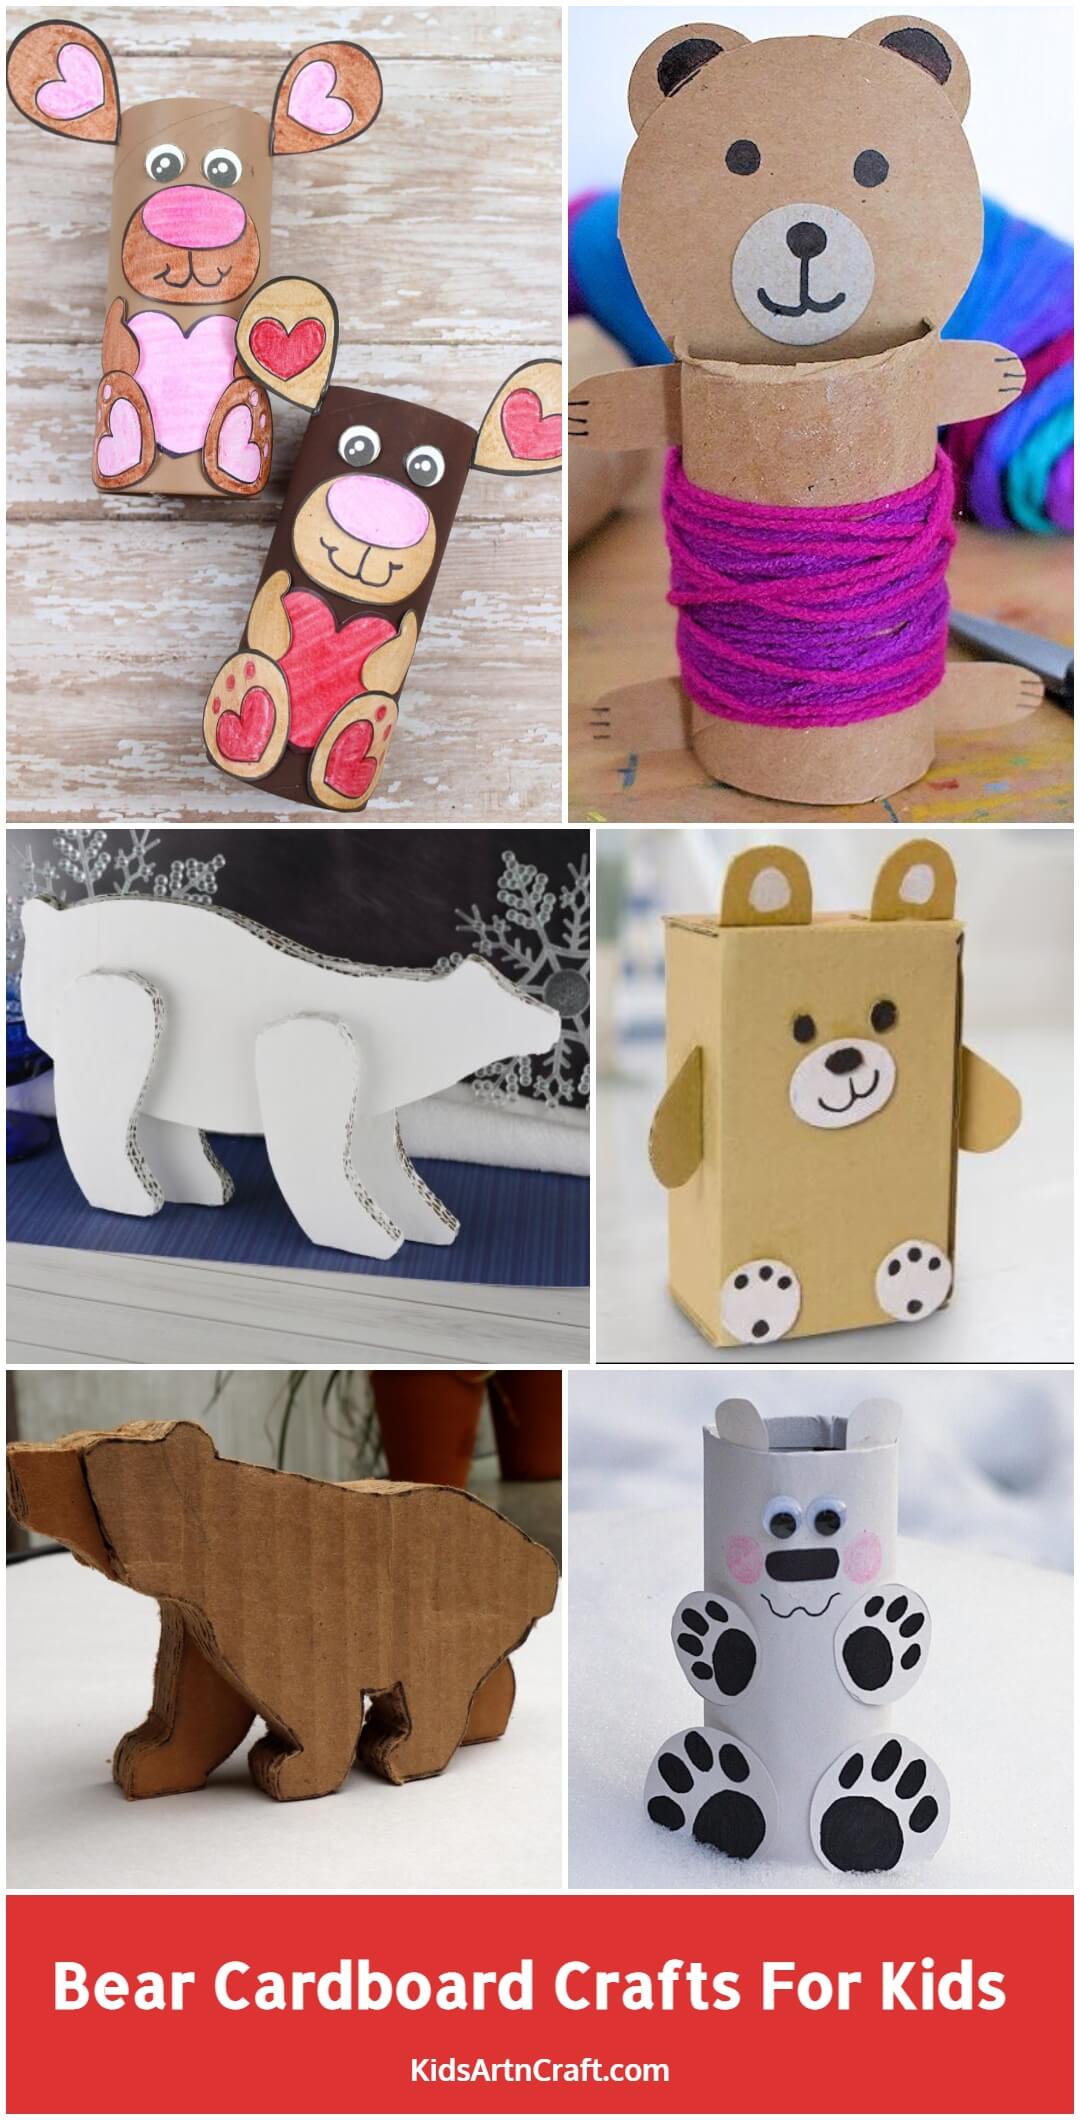 Bear Cardboard Crafts for Kids